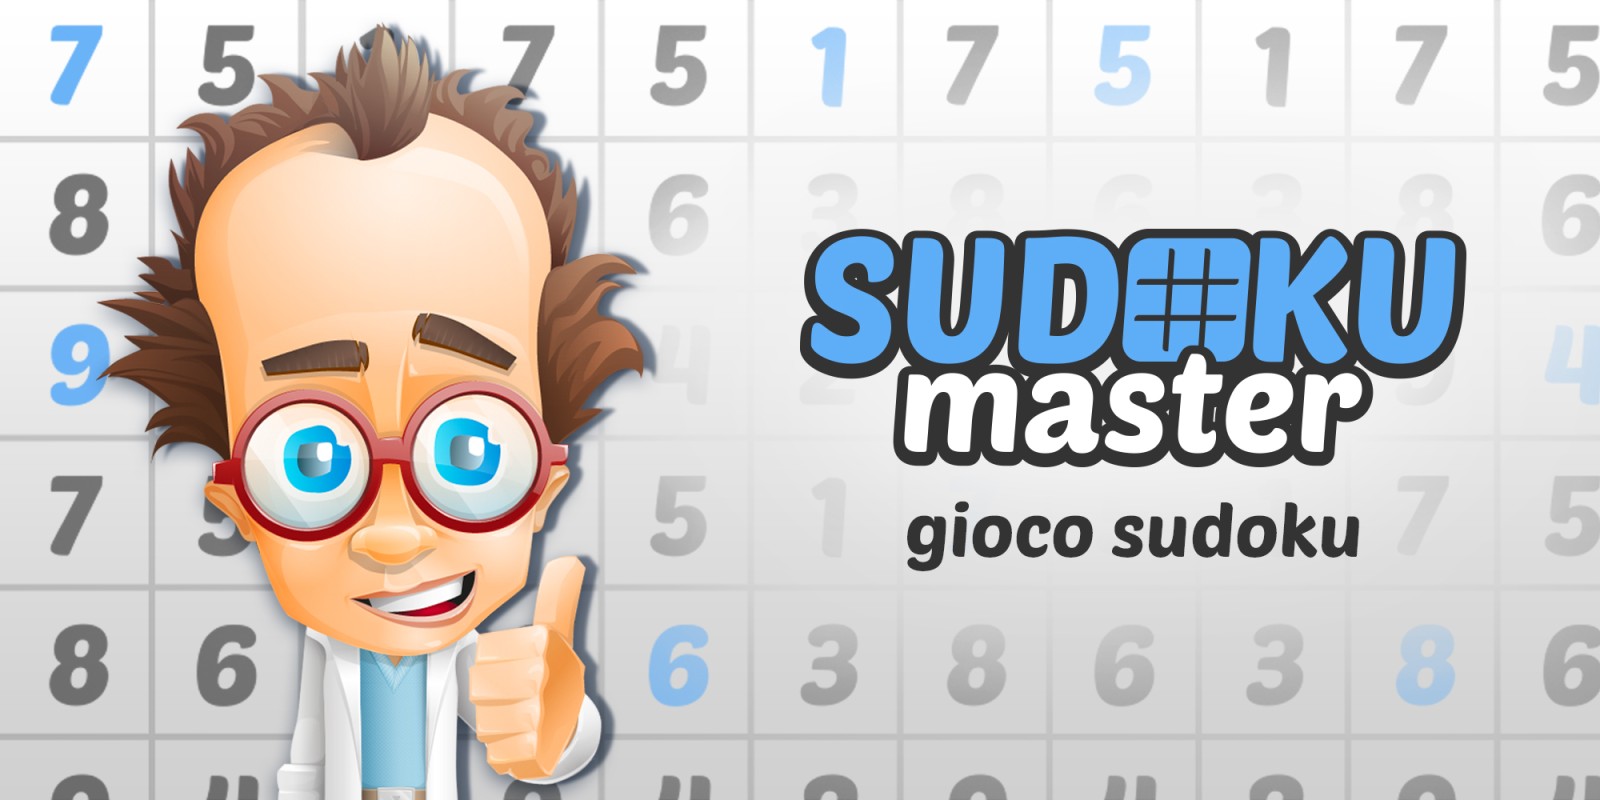 Sudoku Master- gioco sudoku